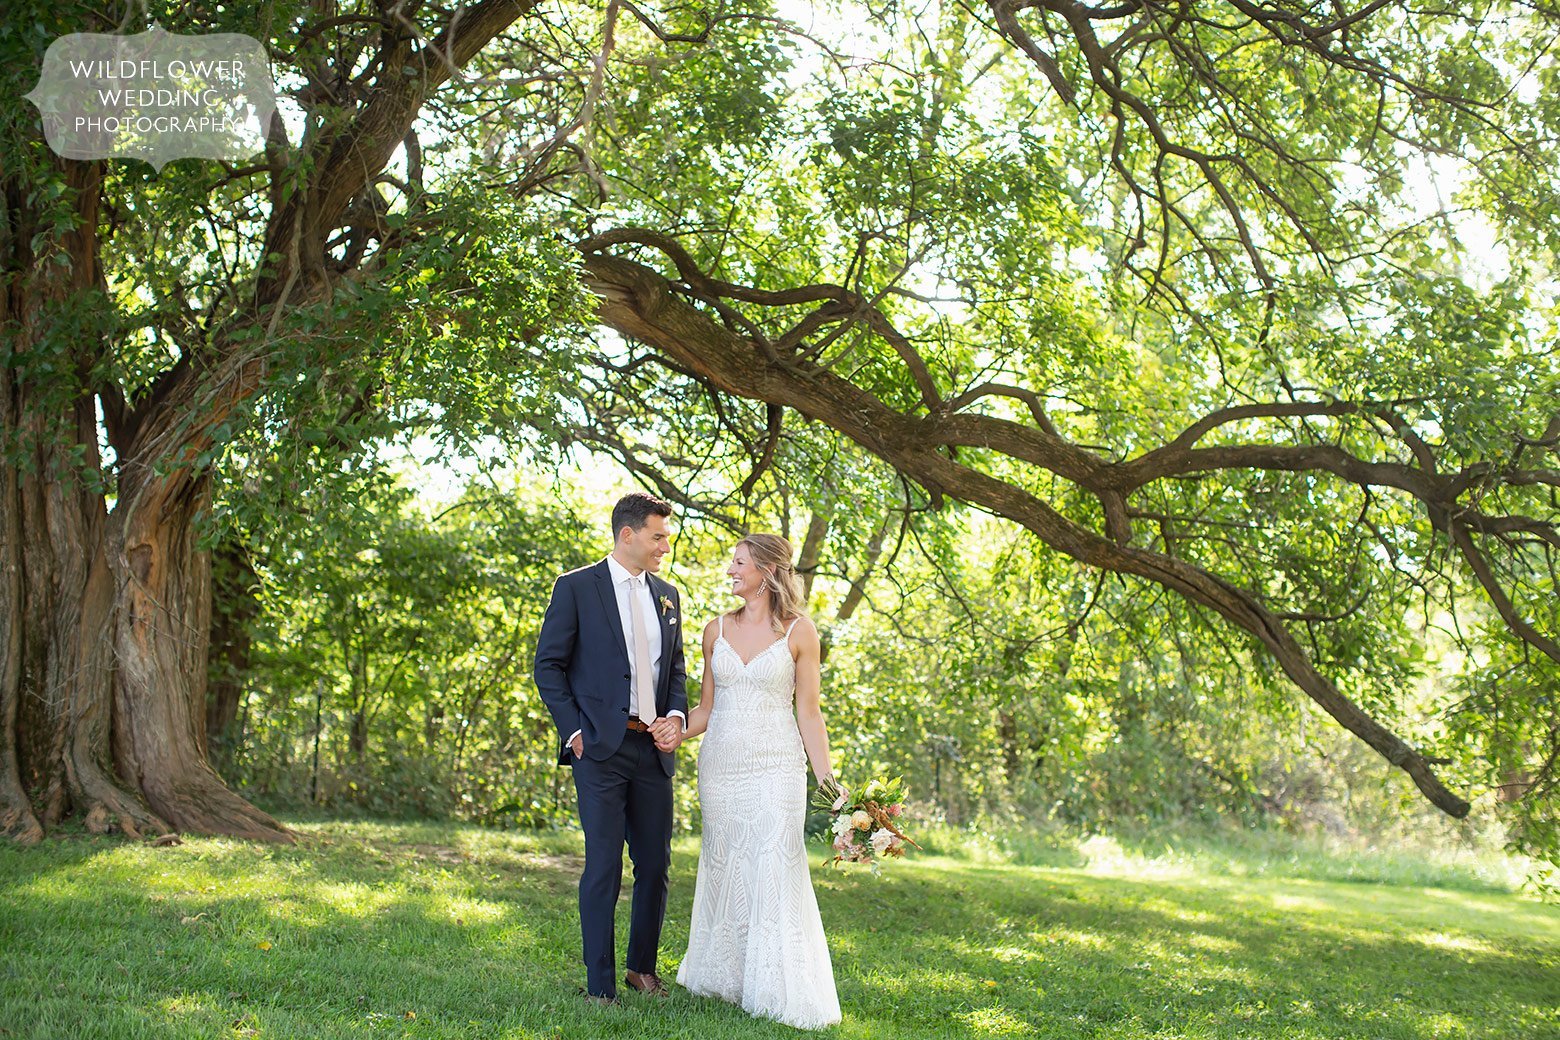 Southern wedding photographer captures bride and groom under oak tree.